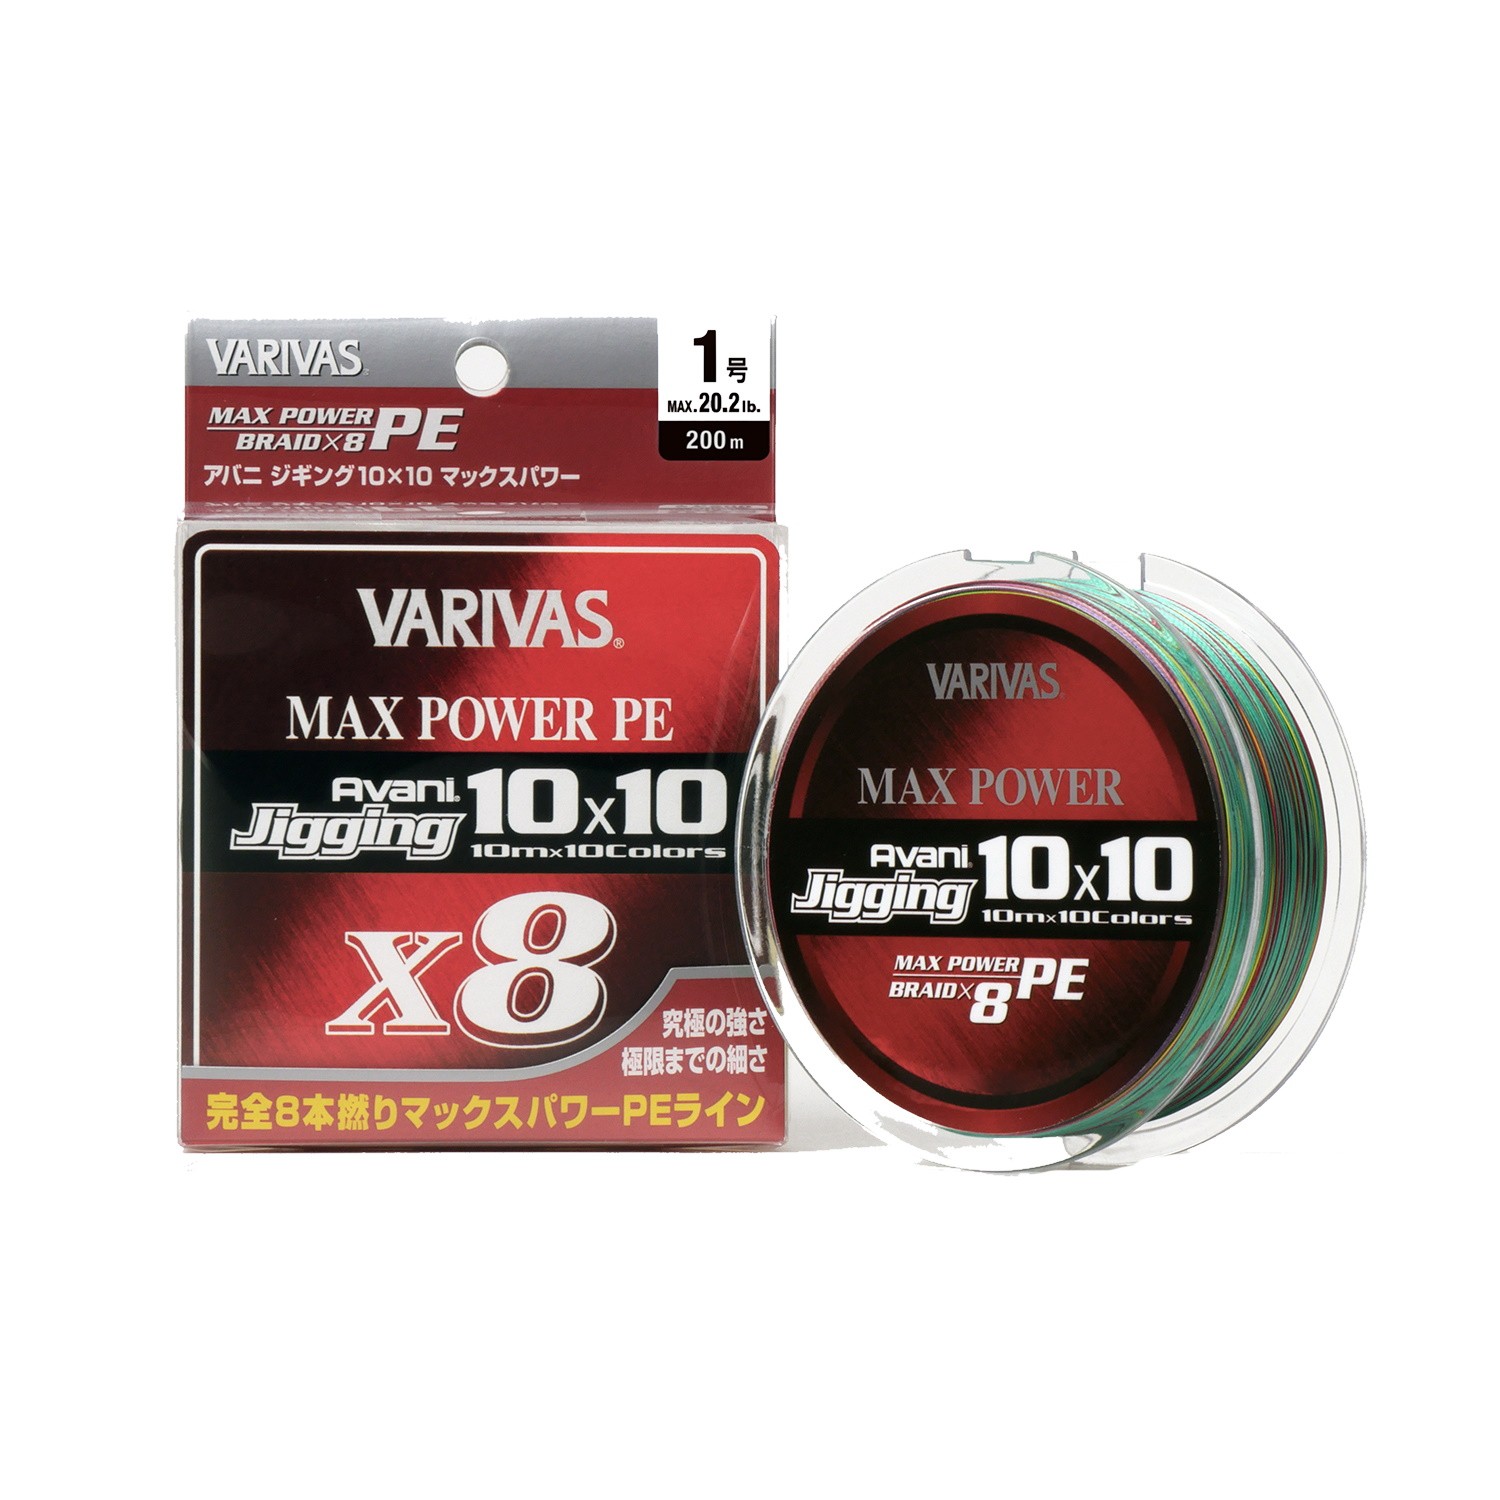 Шнур Varivas Avani Jigging 10x10 Max Power PE X8 200м PE 3.0